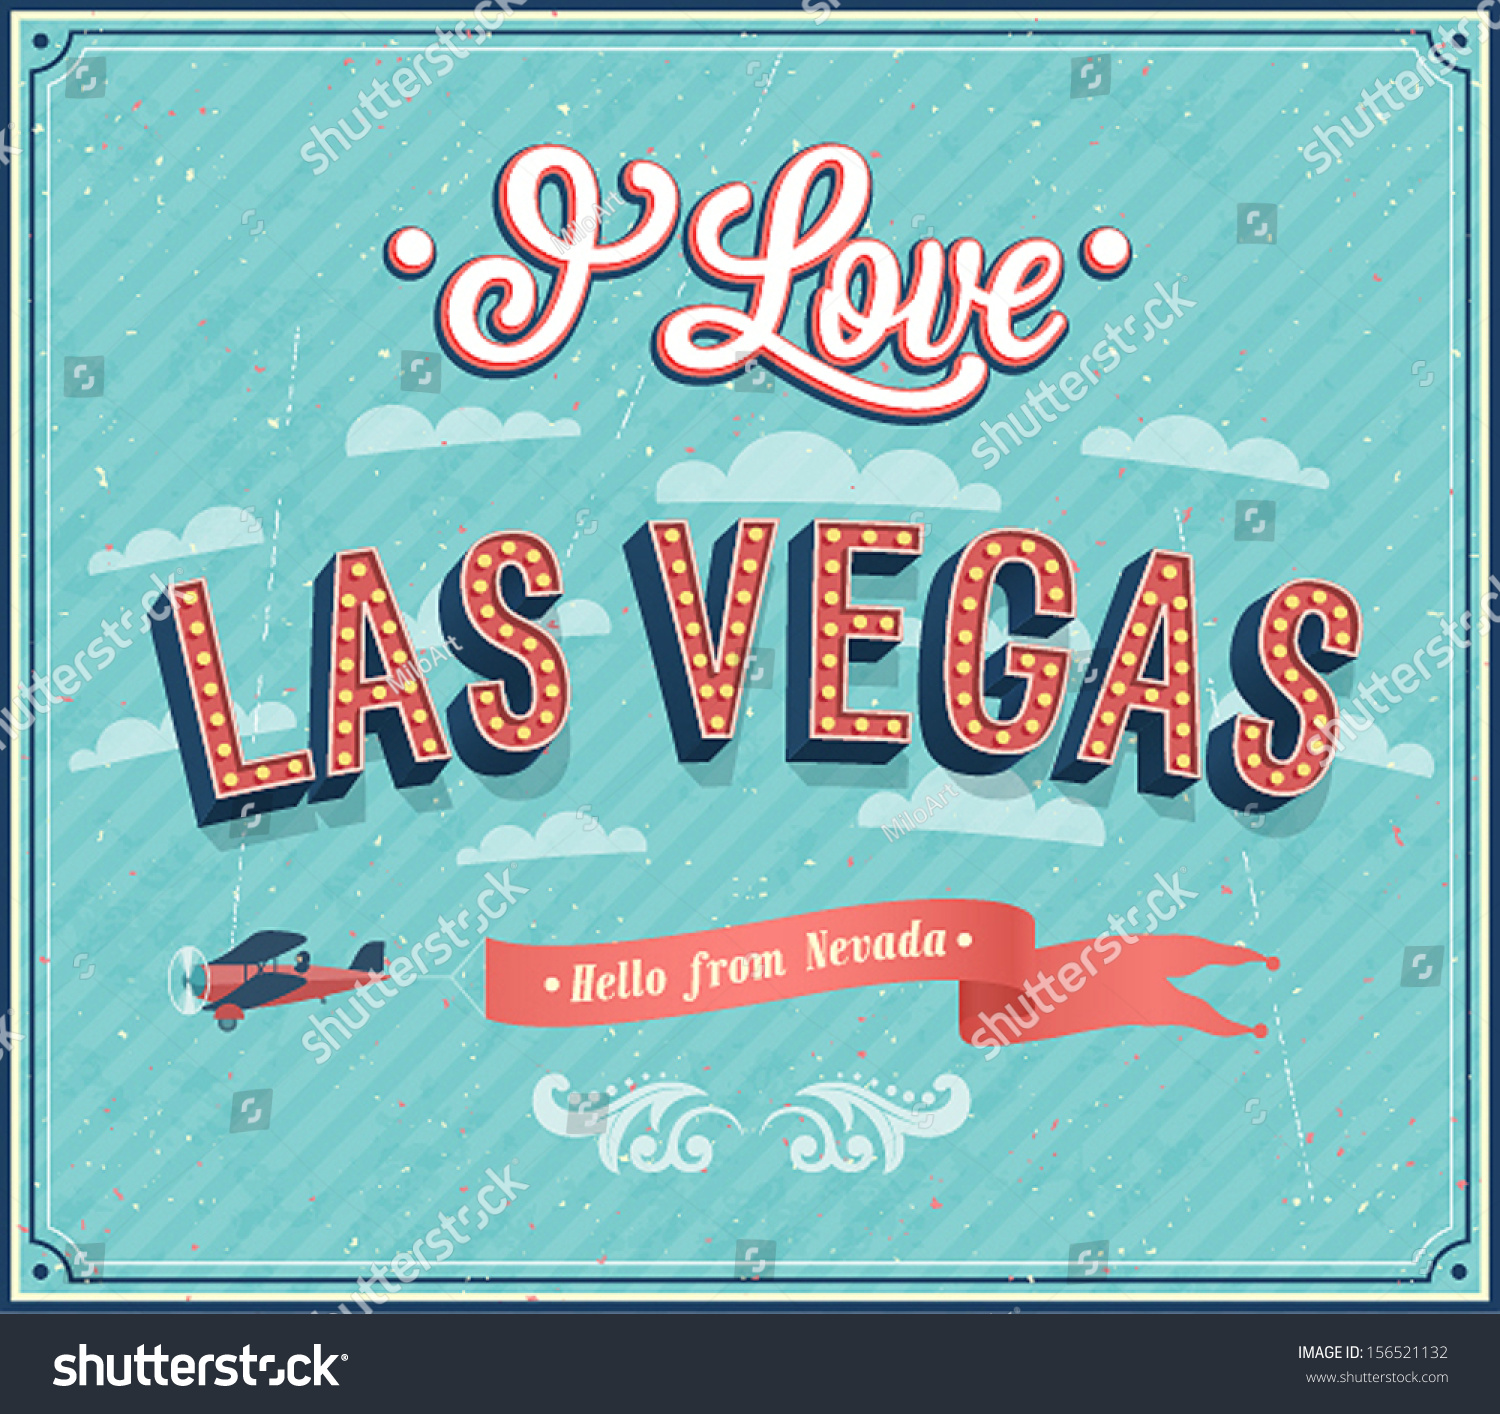 Vintage Greeting Card From Las Vegas - Nevada. Vector Illustration ...